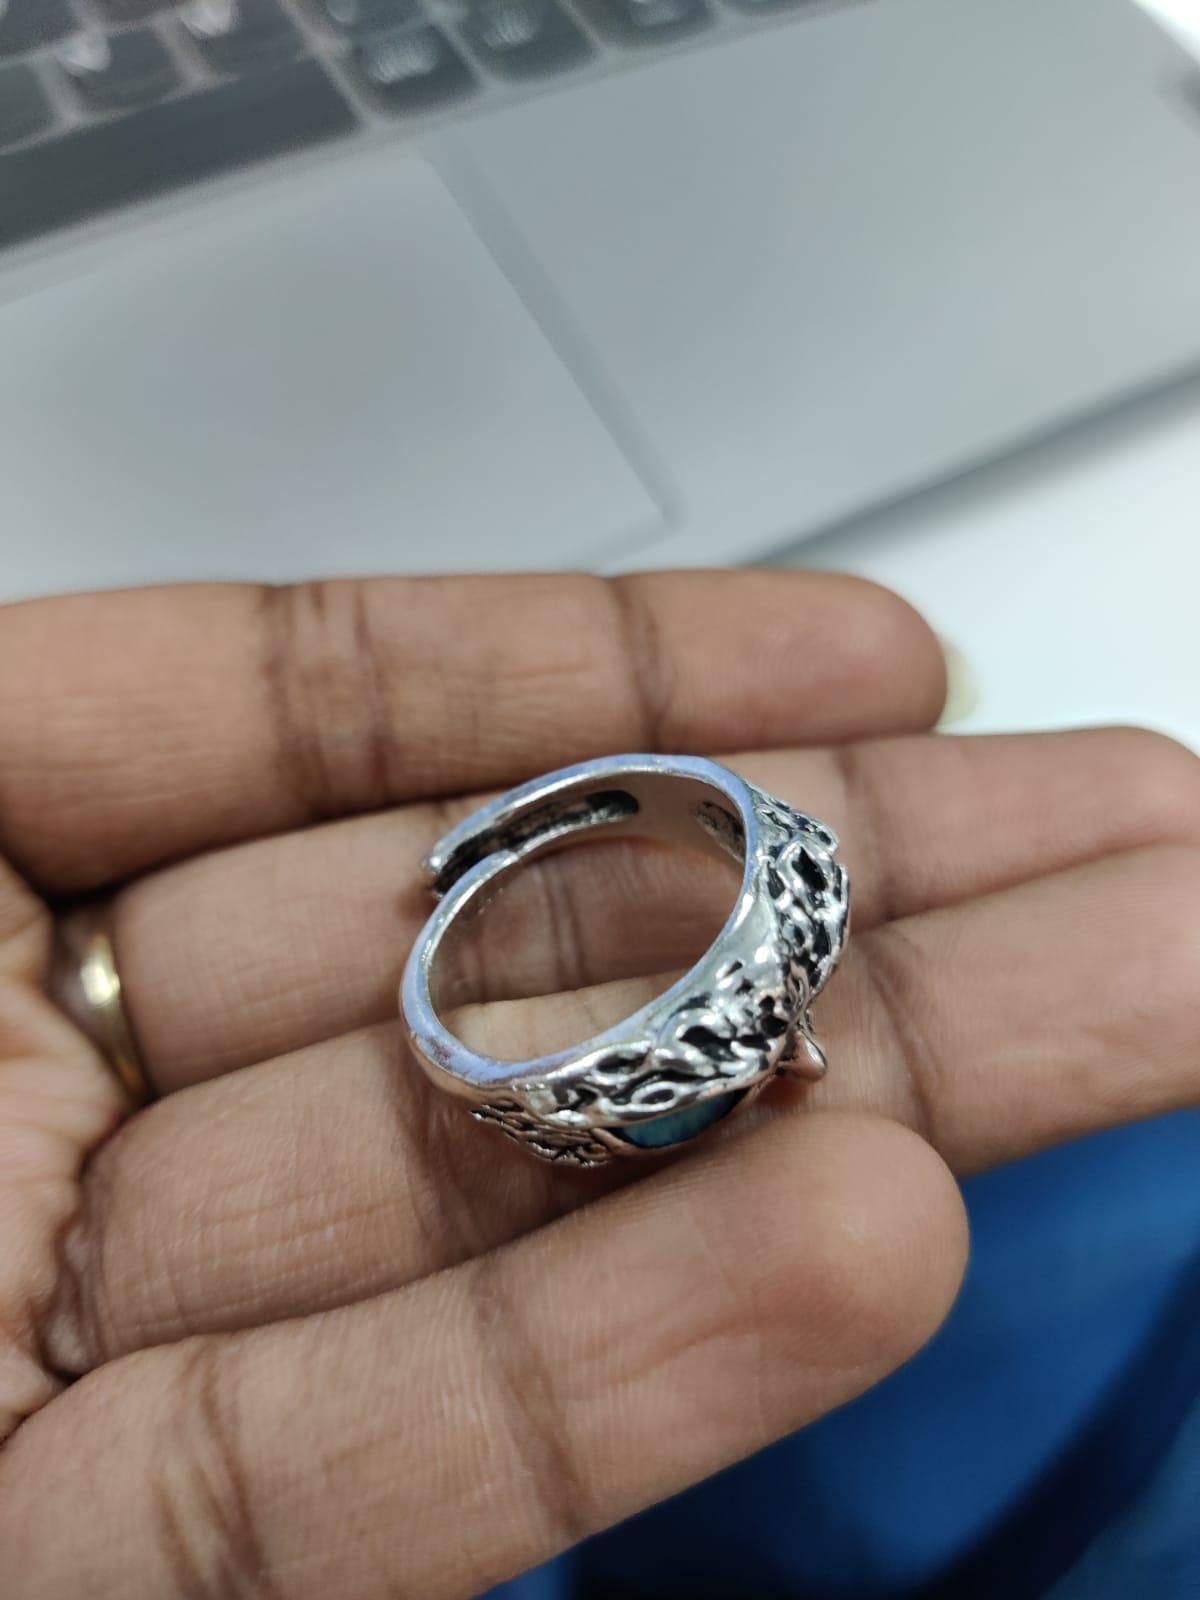 Owl ring adjustable, metal (BUY 1 GET 1 FREE)